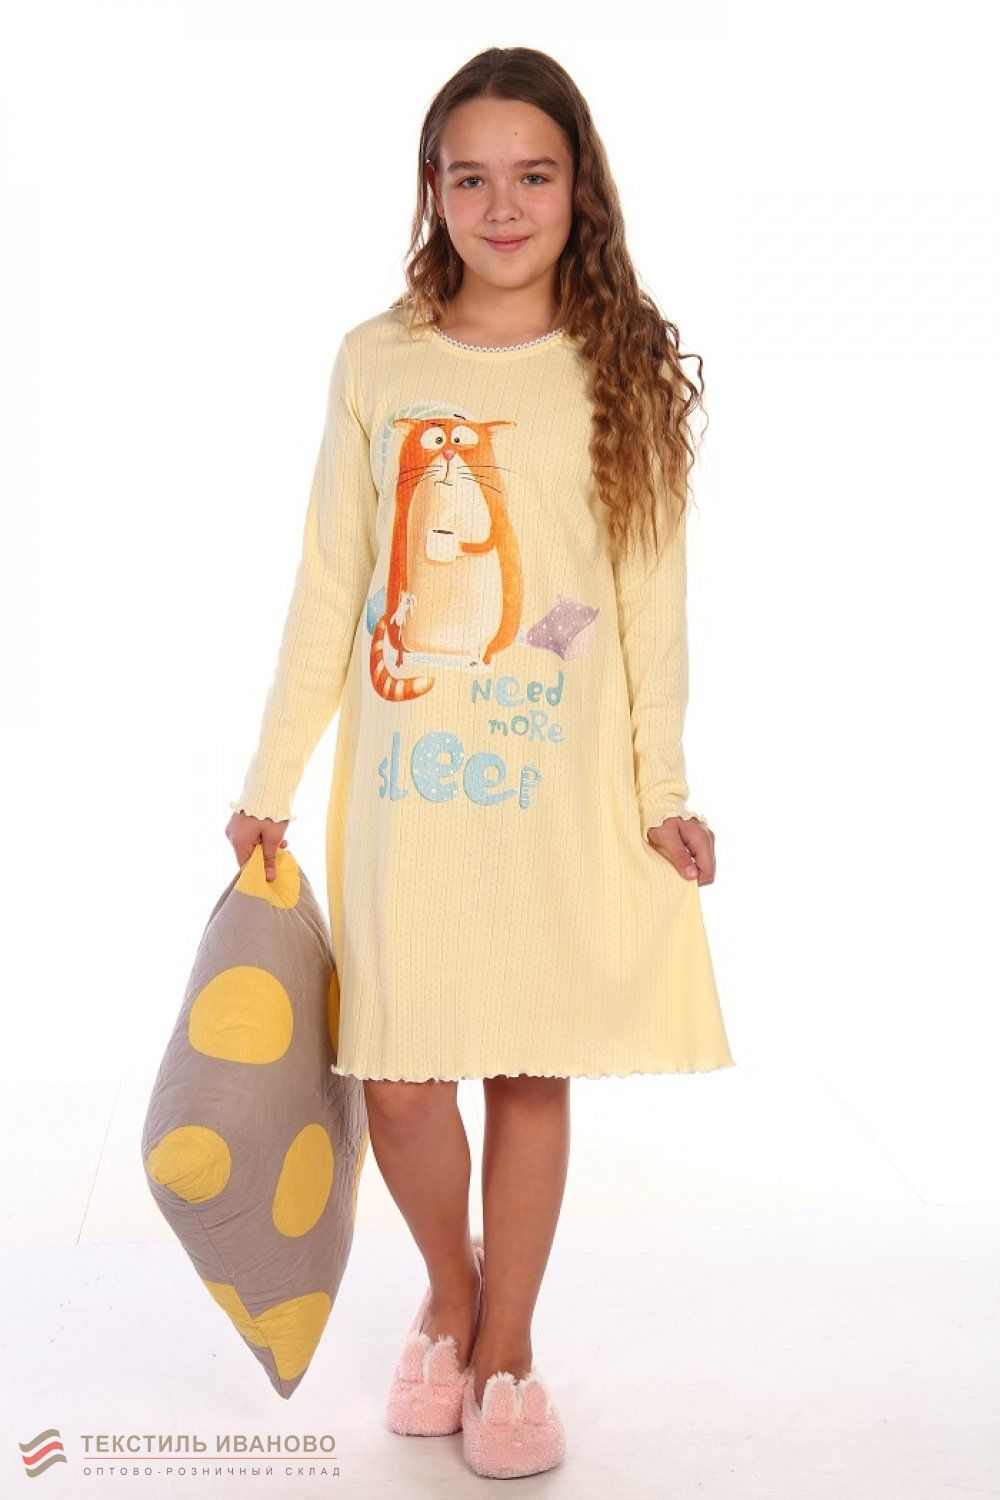  Сорочка на девочку Будильник трикотаж, фото 1 